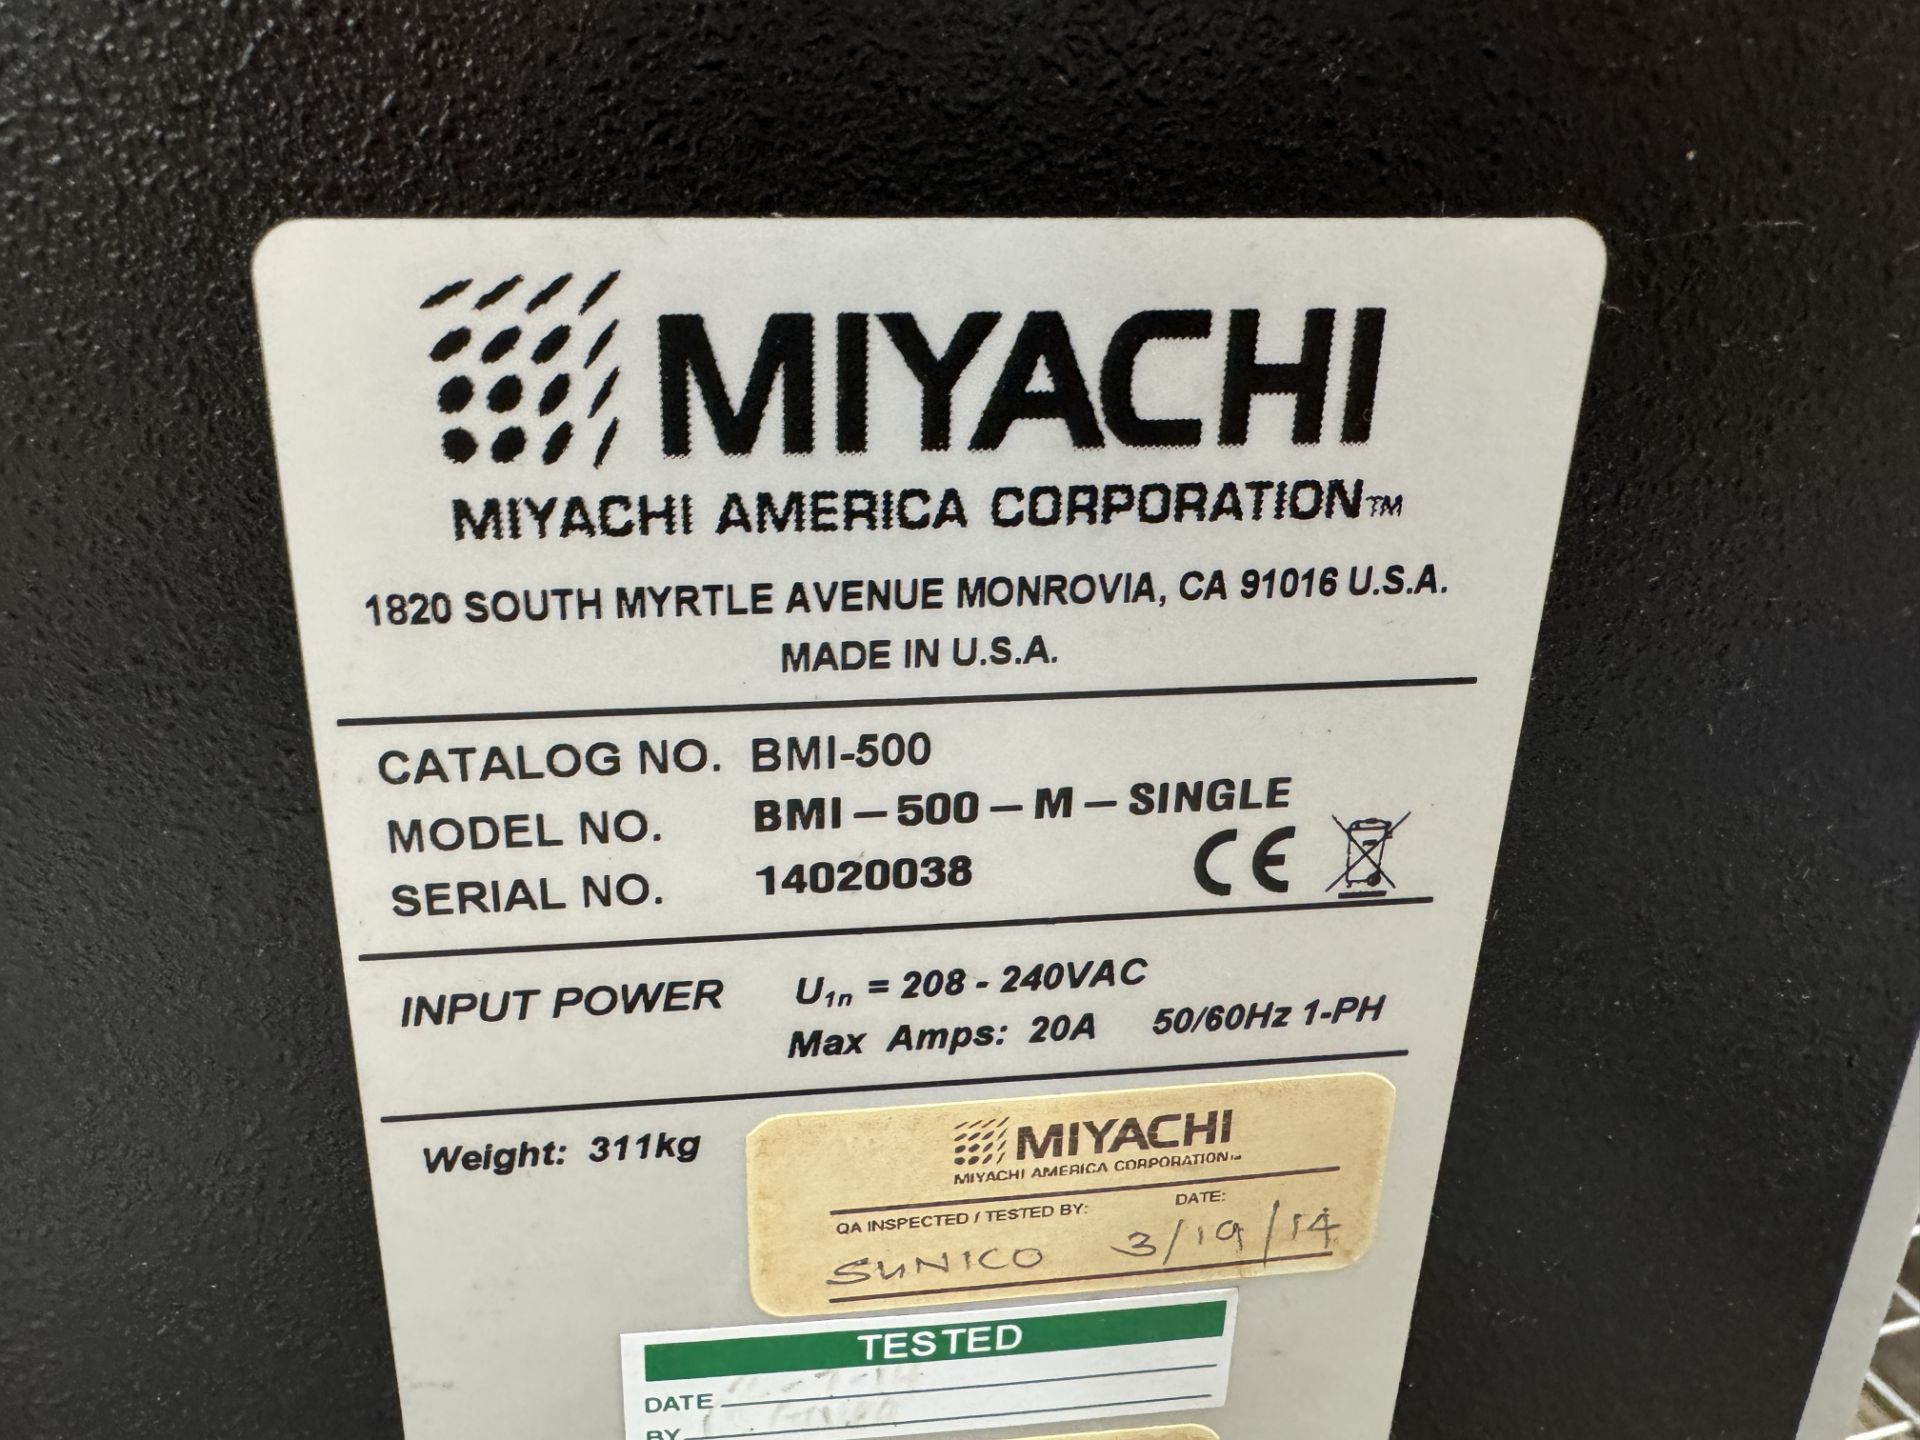 2014 MIYACHI AX-5000 LASER WELDING GLOVEBOX CAT: 00197605 MODEL # 98-070-01 SERIAL # 14010133; - Image 5 of 8